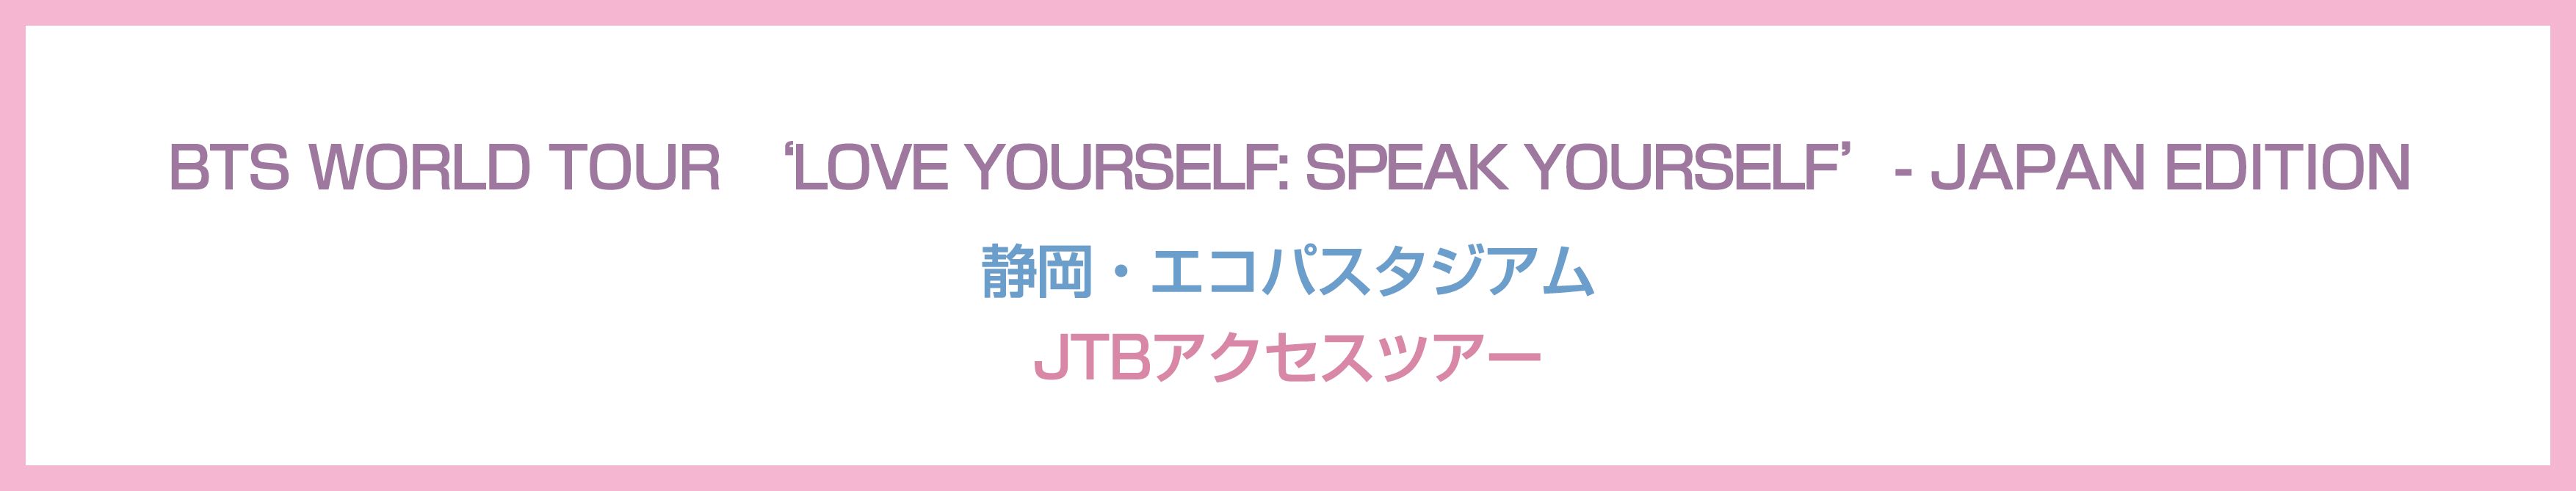 BTS WORLD TOUR 'LOVE YOURSELF: SPEAK YOURSELF' - JAPAN EDITION  – エコパスタジアム JTBツアー